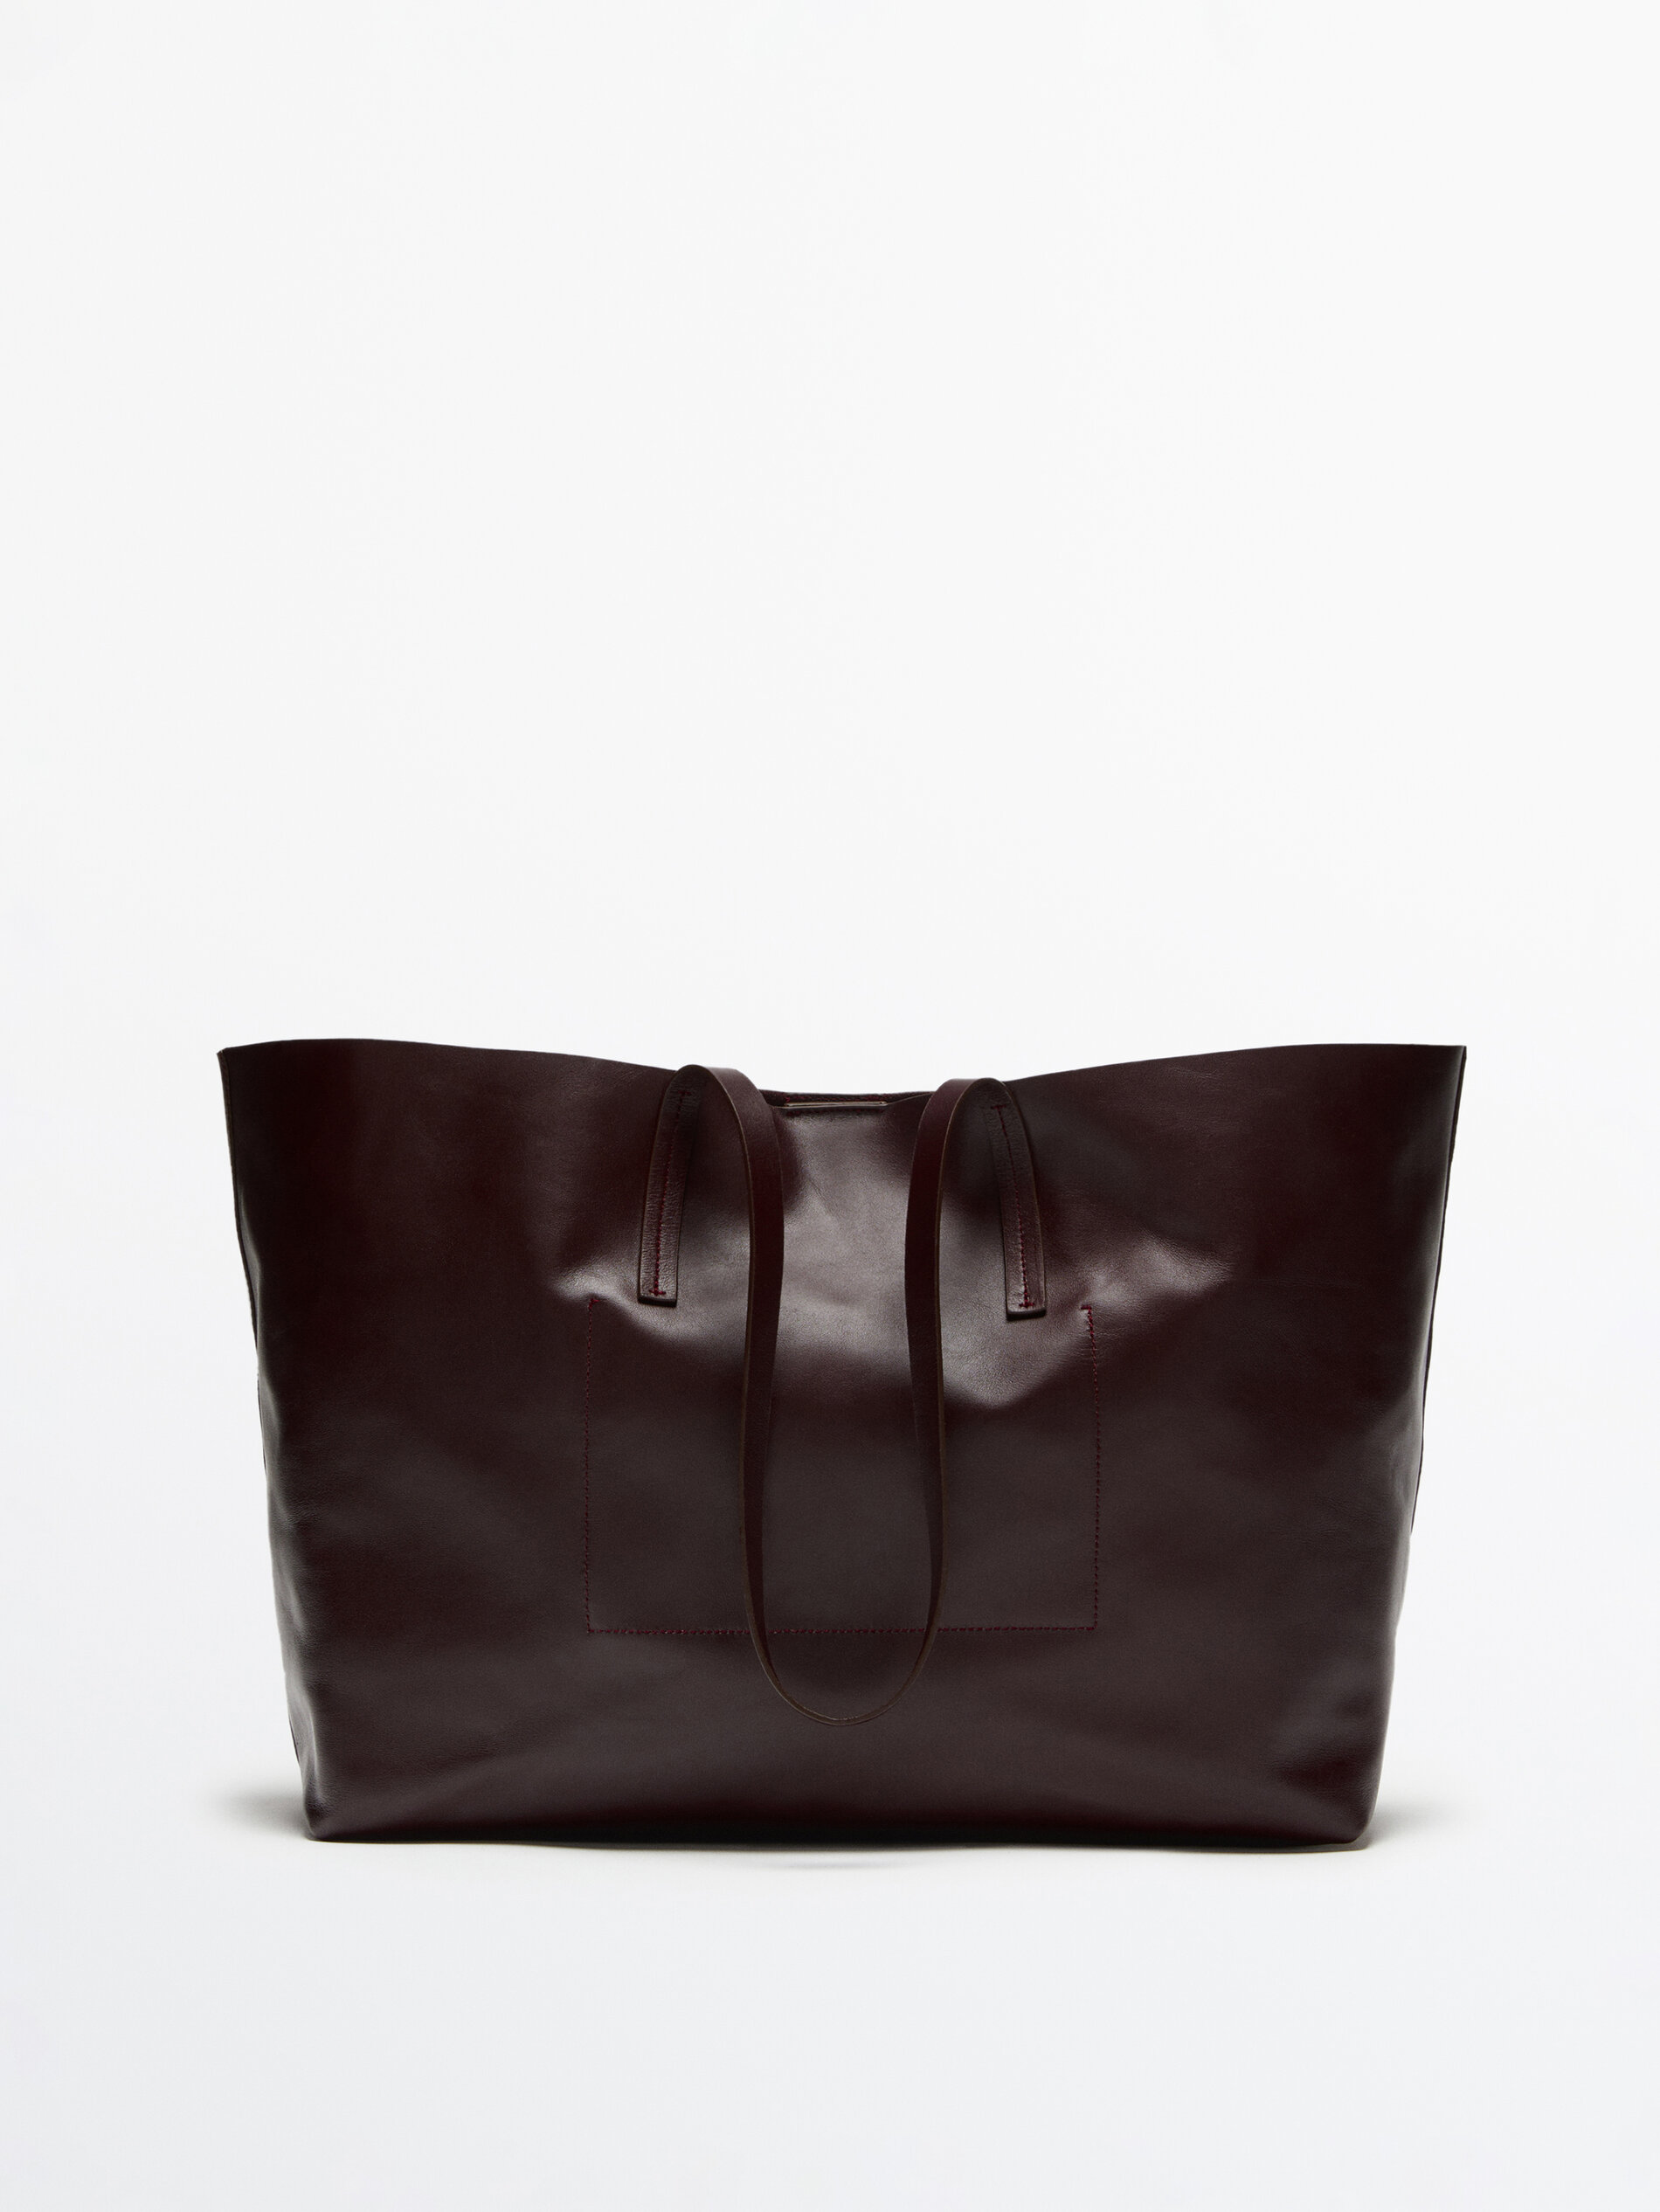 Camilla equestrian inspired Handbag Cognac Nappa Leather – Bruno Magli